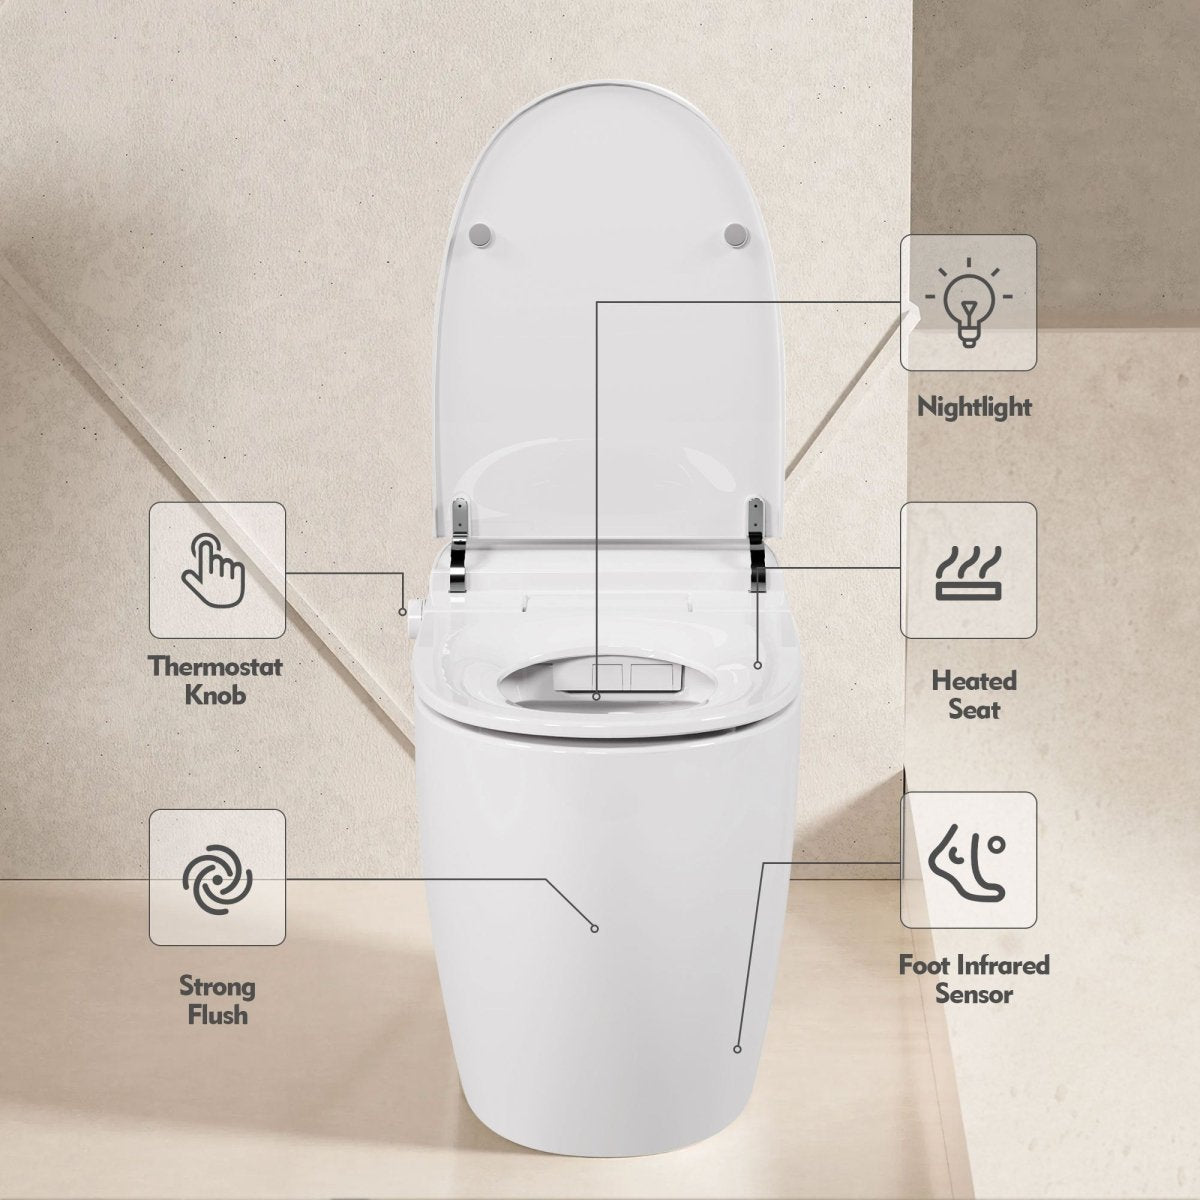 ExBrite Heated Seat Smart Toilet, Automatic Flush Tank, Foot sensor Flush, Night Light, Knob Control, Power Outage Flushing, Soft Close